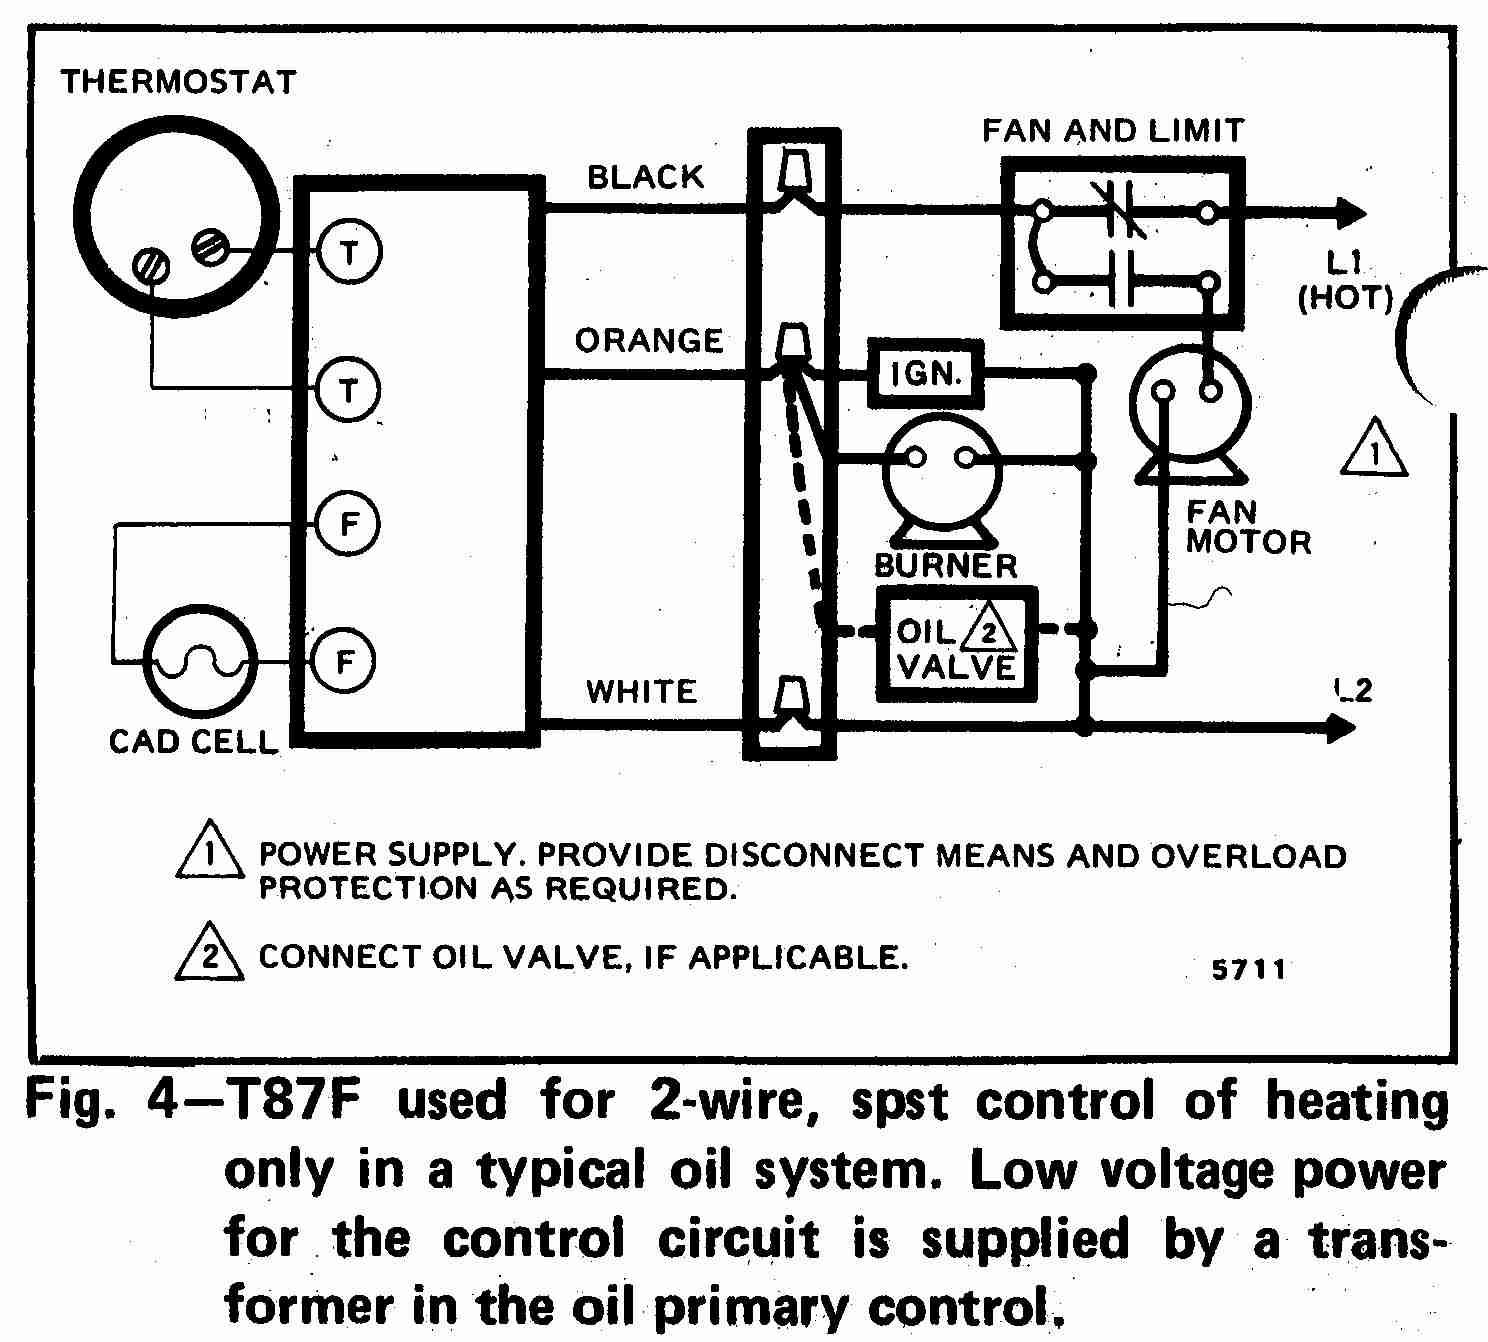 Thermostat Wiring Diagram Besides Honeywell Thermostat Wiring On Old York Thermostat Wiring